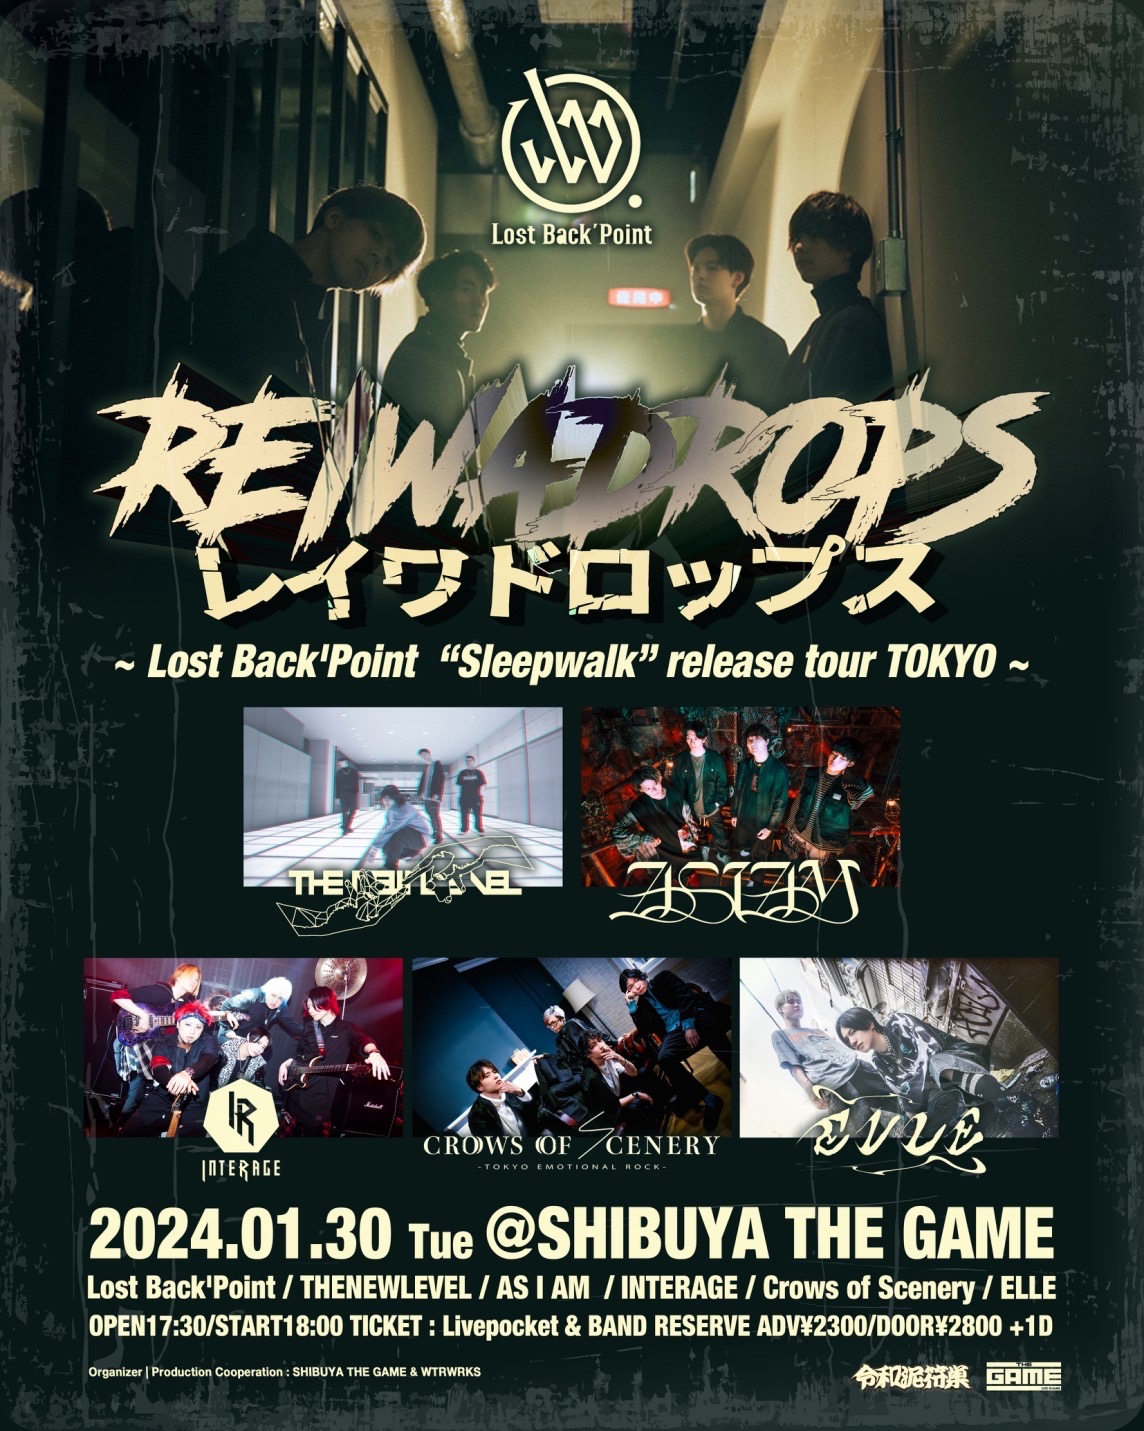 『REIWADROPS』~Lost Back'Point "Sleepwalk" release tour TOKYO~